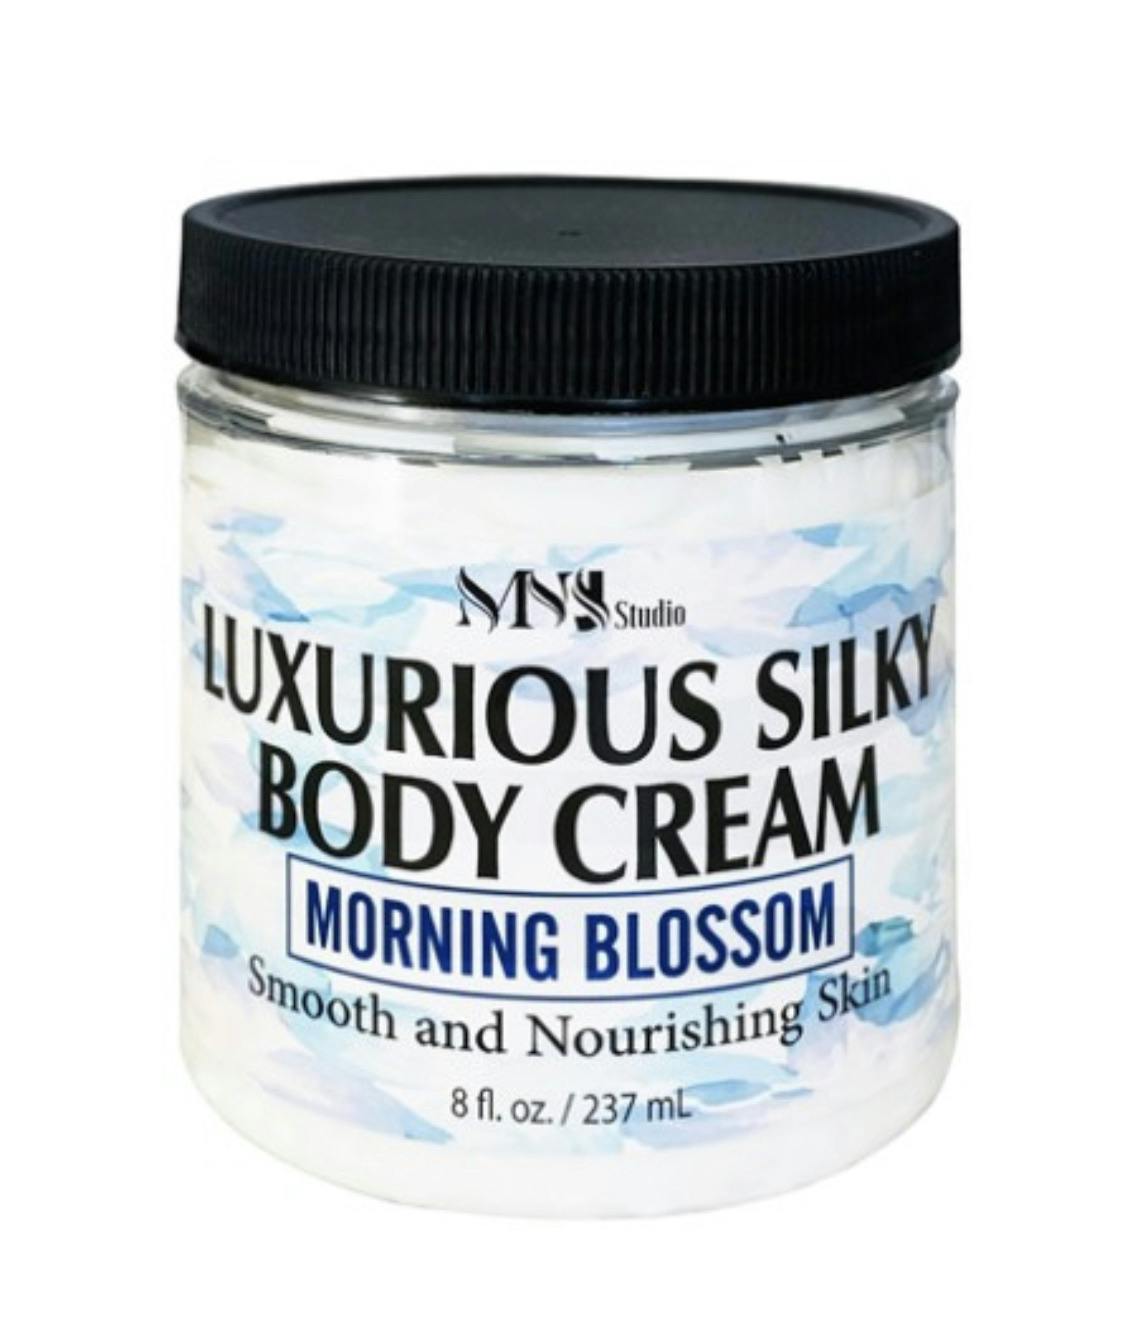 Morning Blossom Luxurious Silky Body Cream